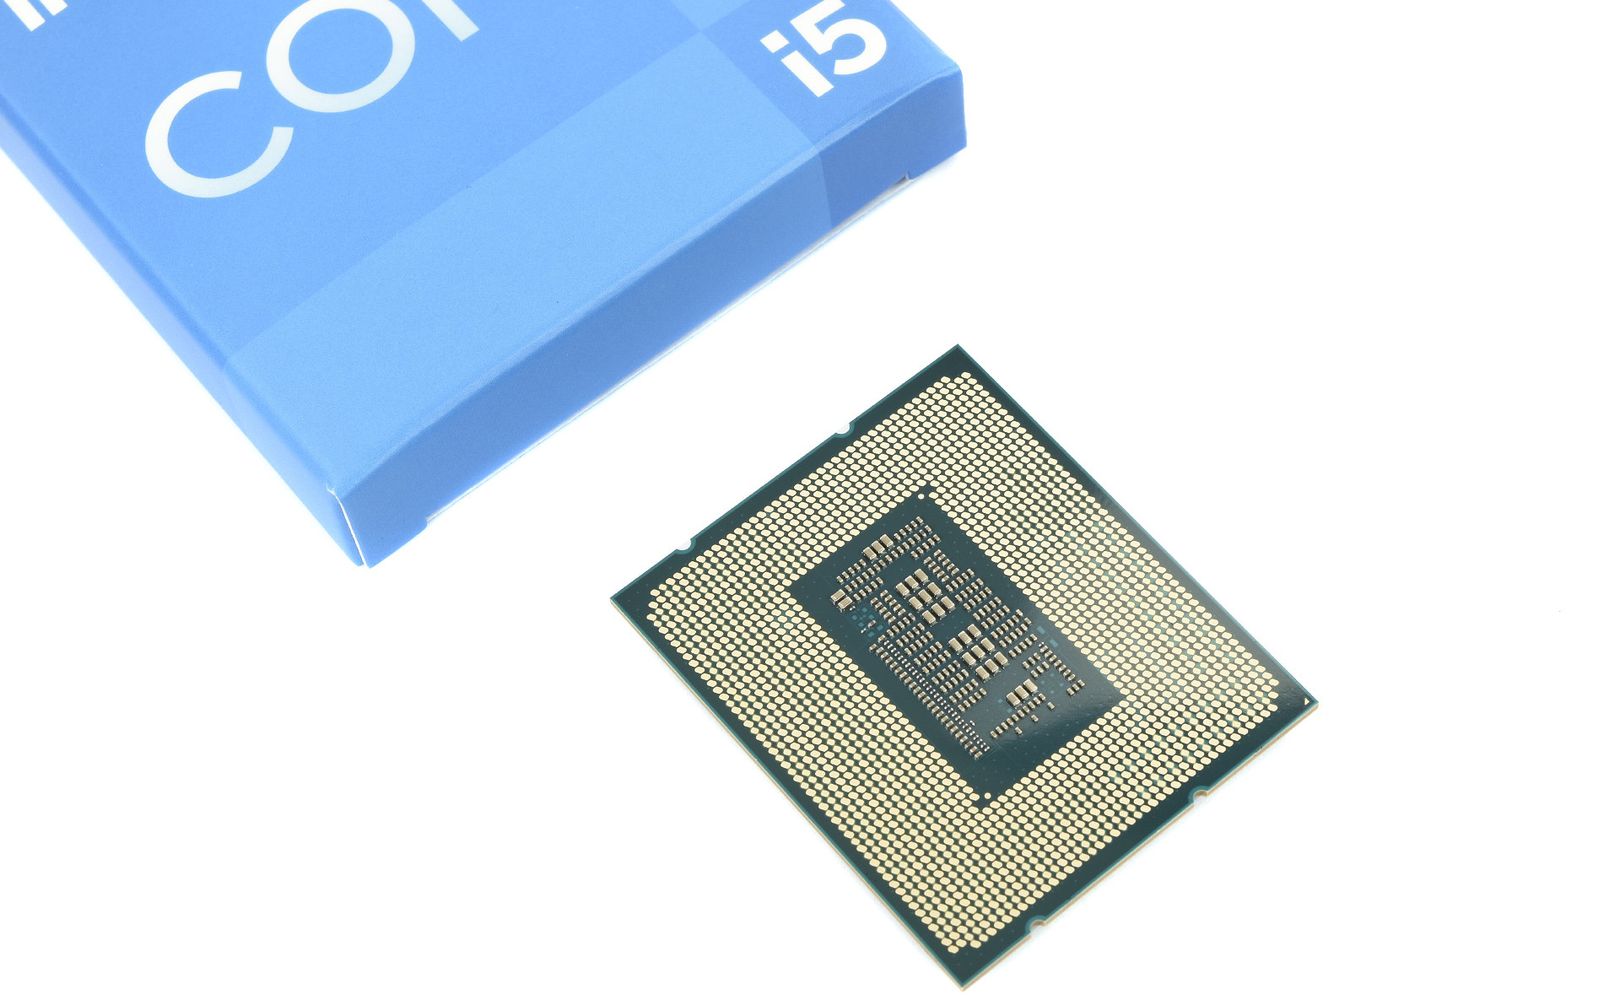 Intel processor ranking